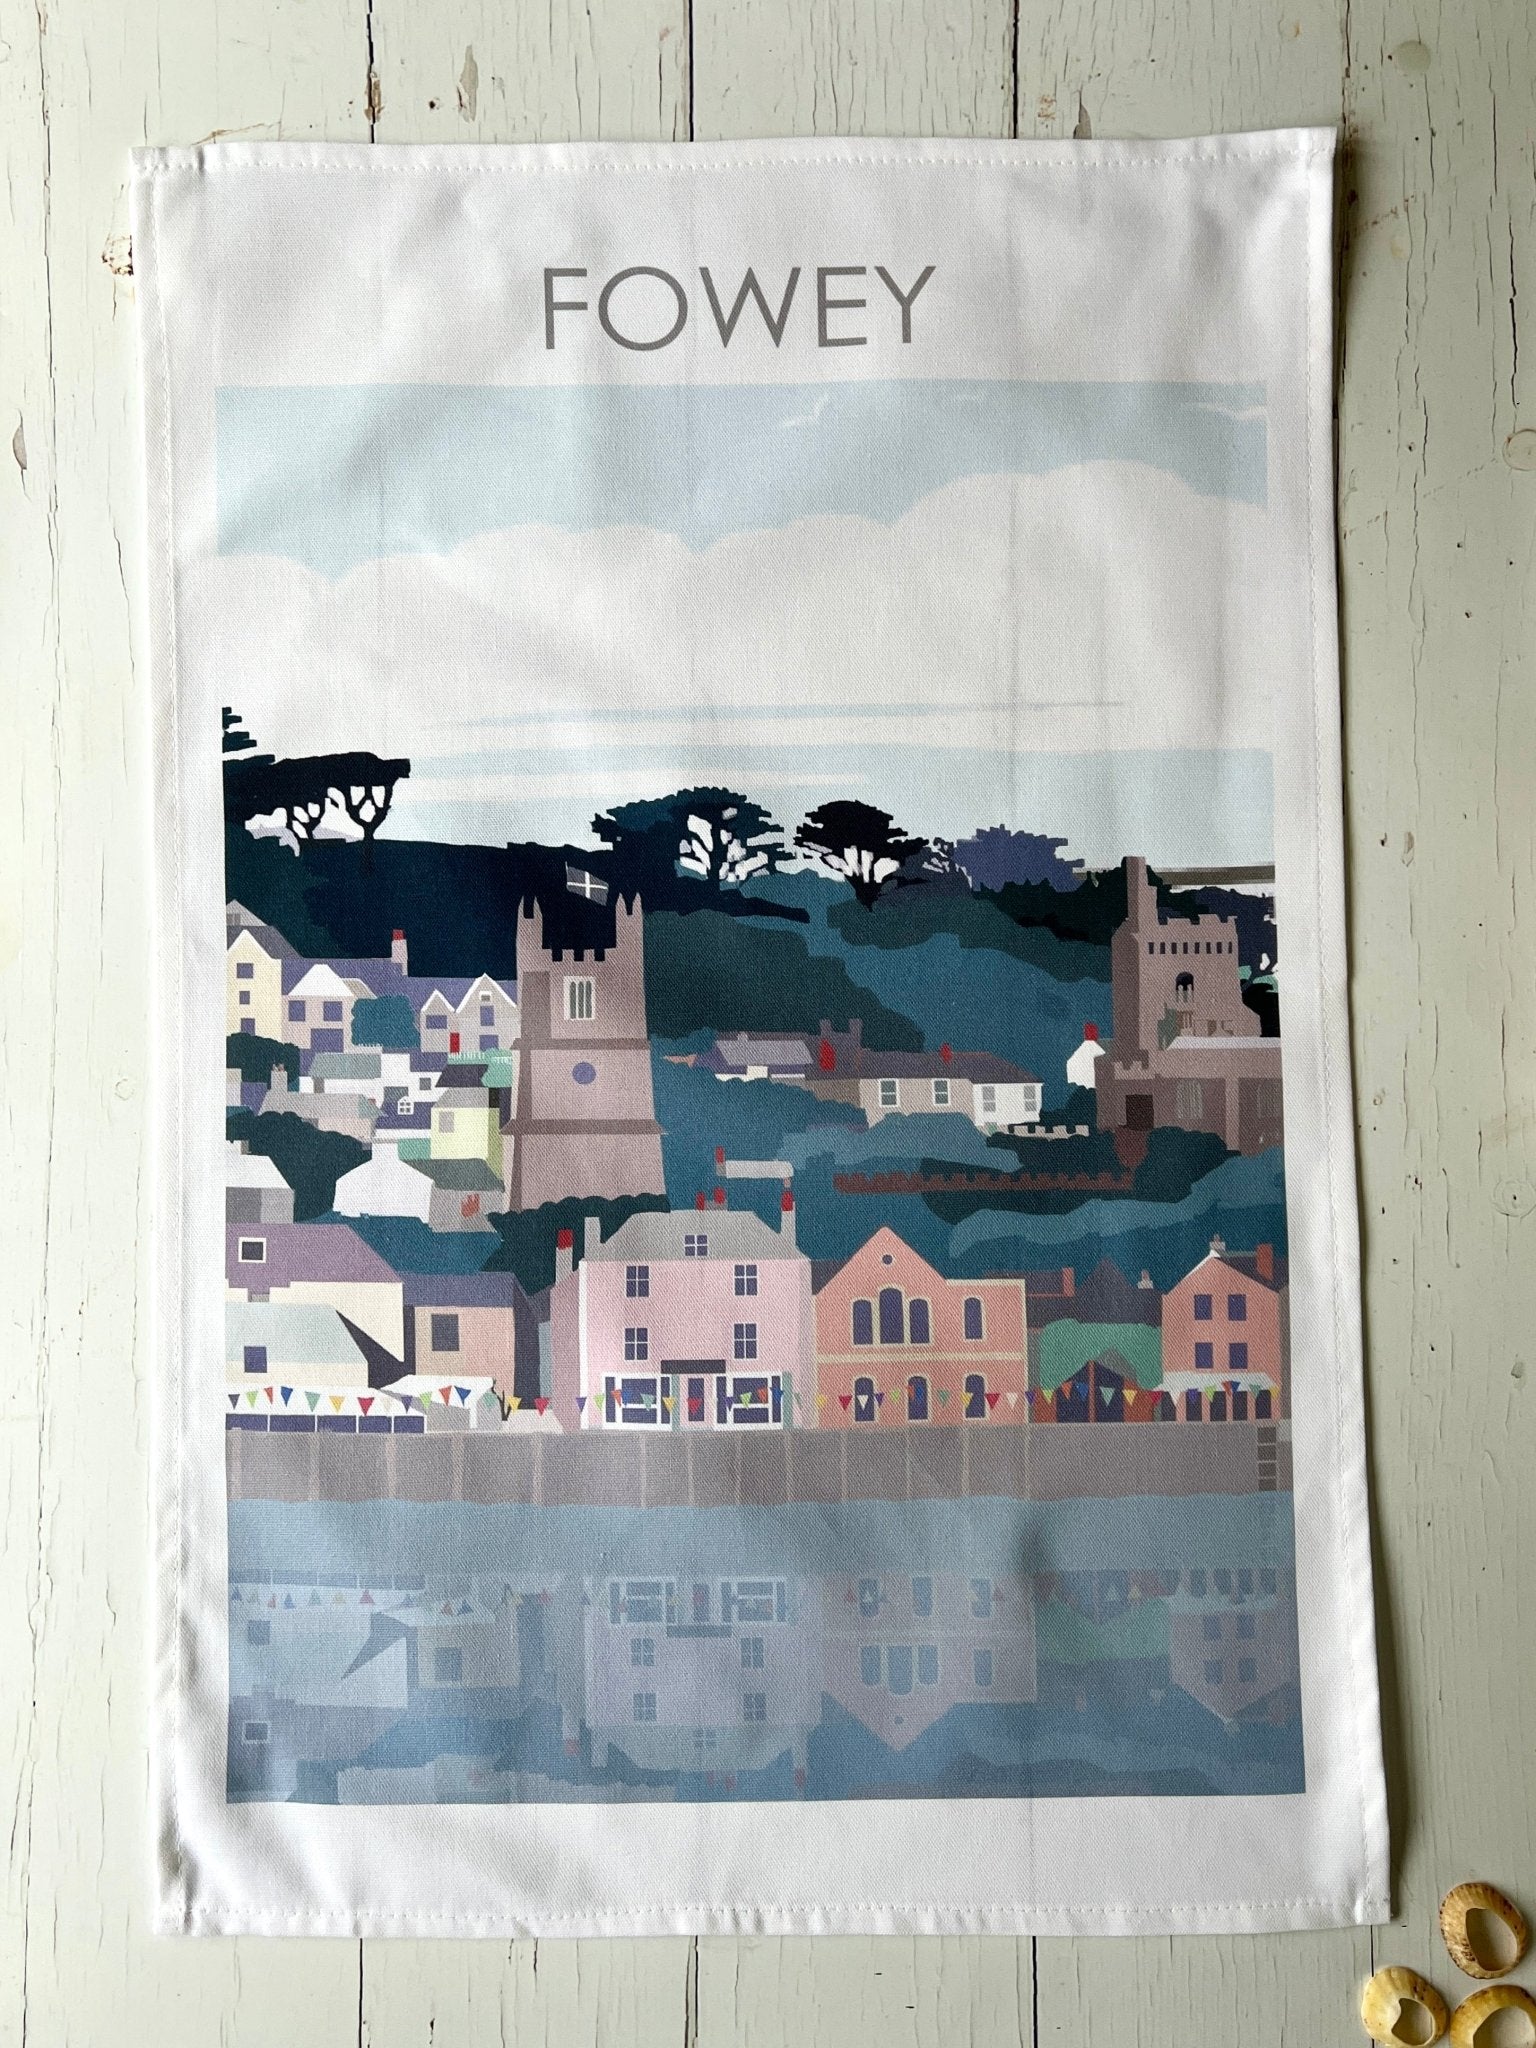 Readymoney Cove & Fowey Illustrated Tea Towels - Readymoney Beach Shop